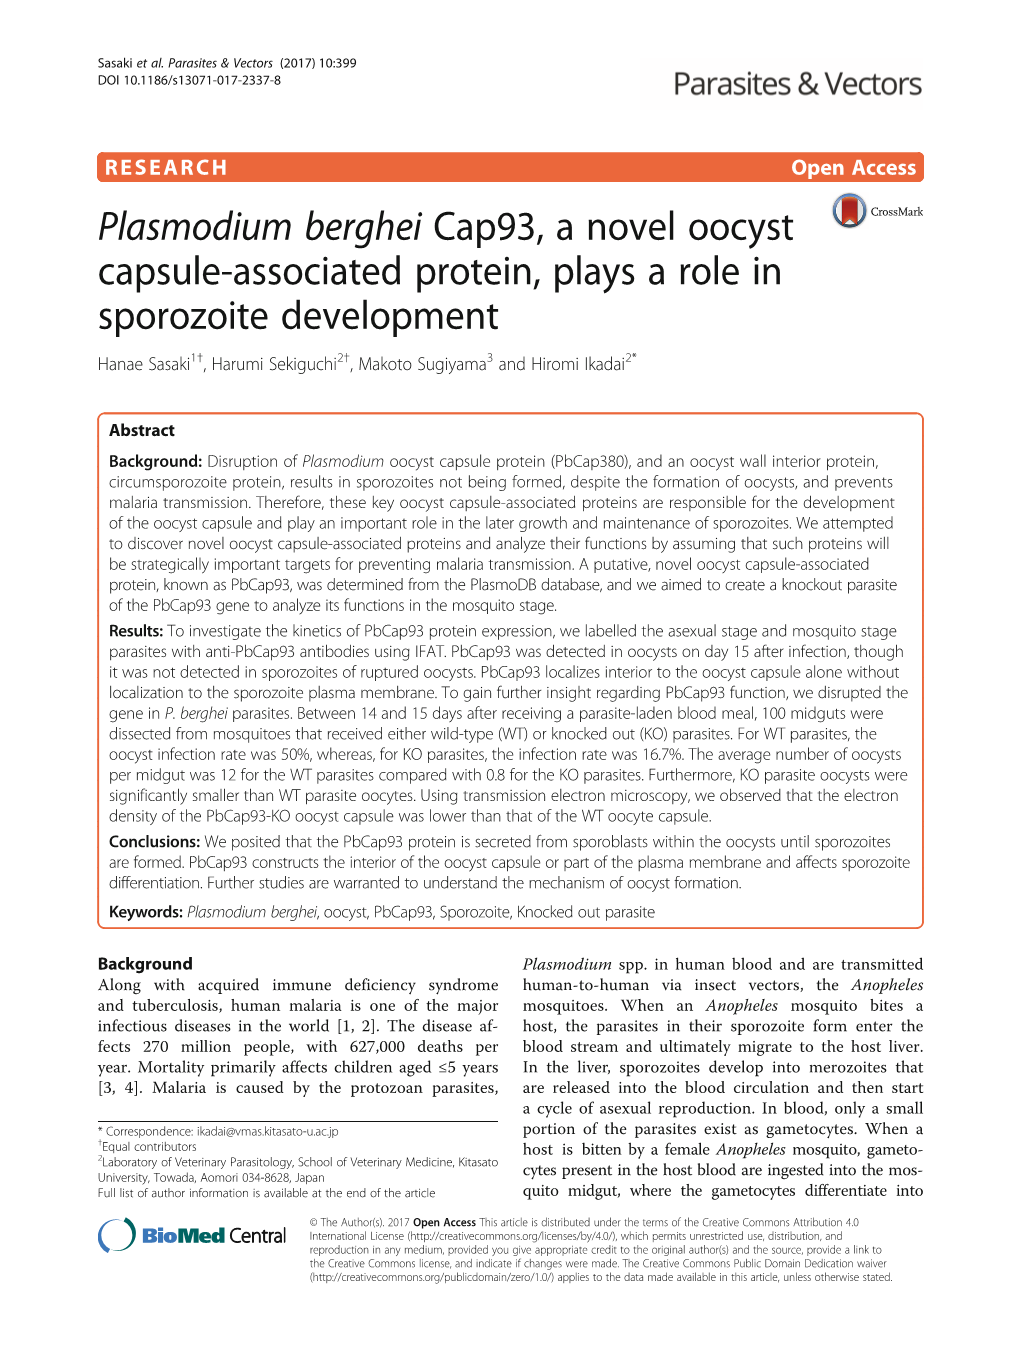 Plasmodium Berghei Cap93, a Novel Oocyst Capsule-Associated Protein